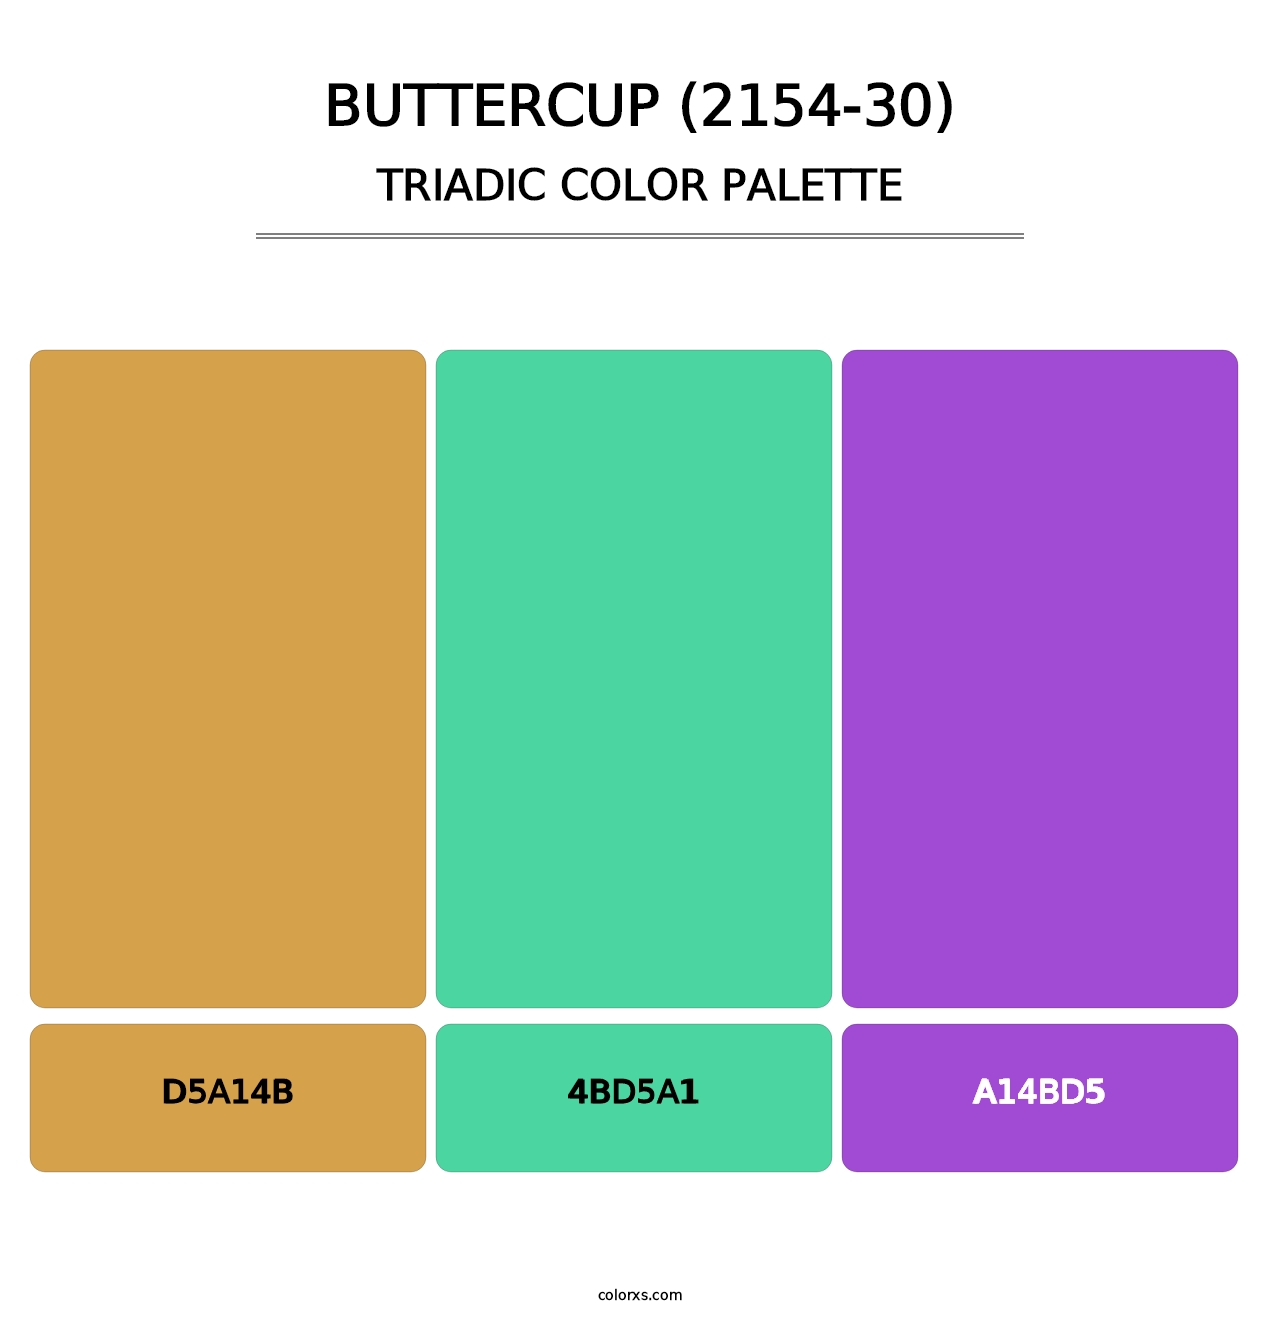 Buttercup (2154-30) - Triadic Color Palette